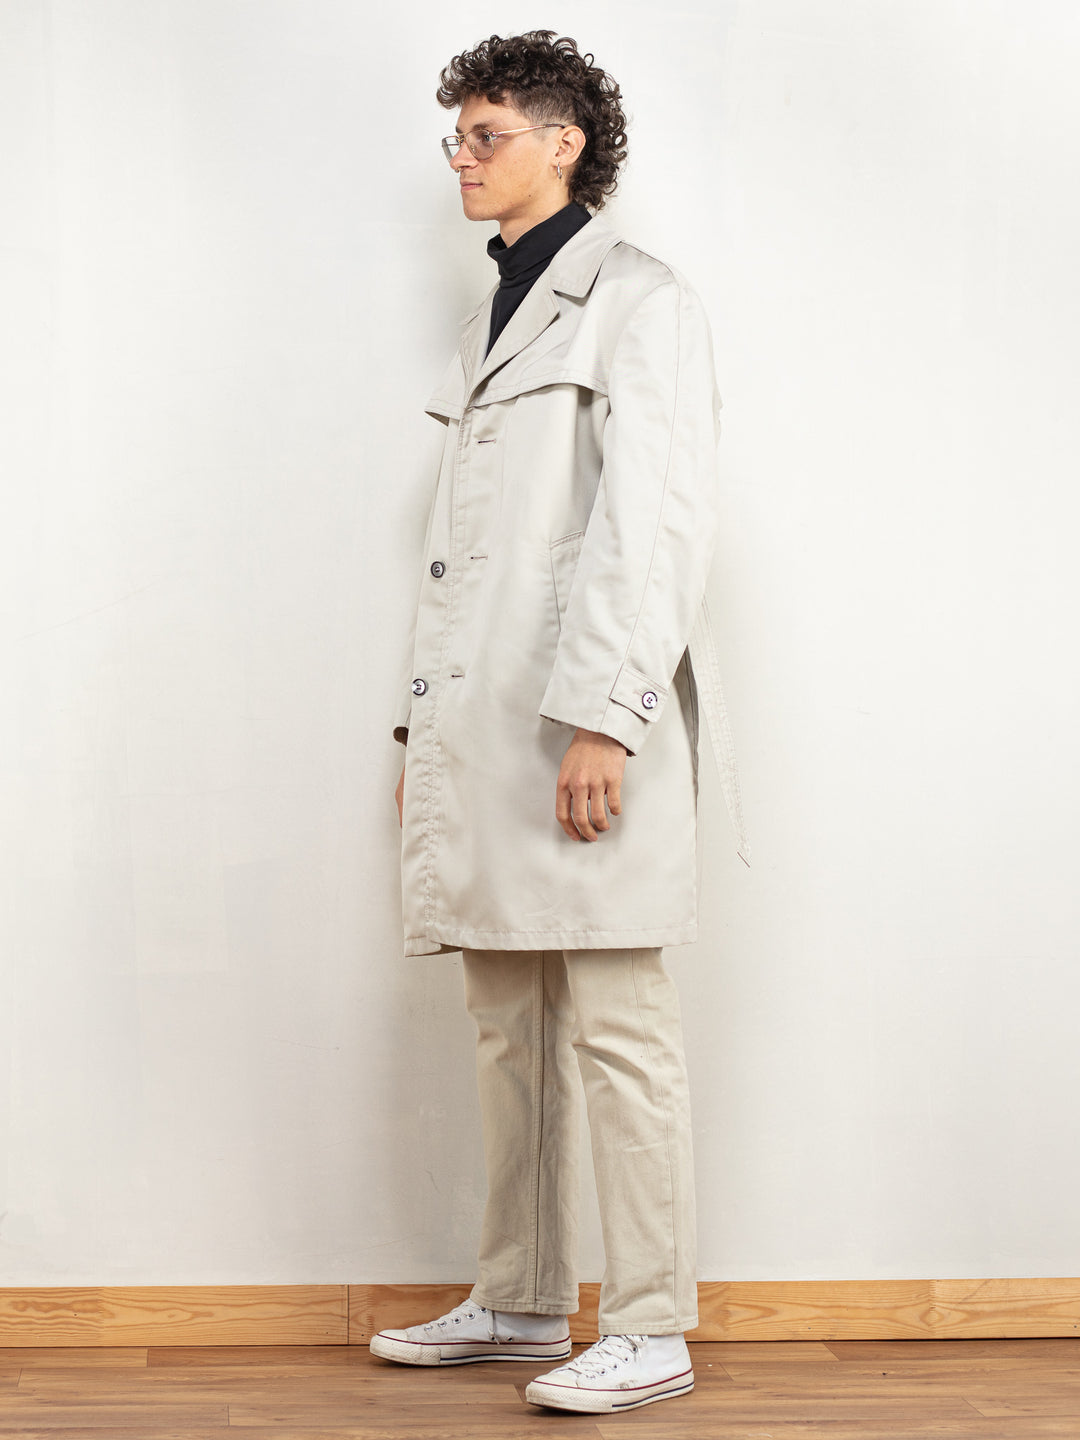 Mens Mac Coat 80's men beige parka mac style overcoat classic trench coat minimalist single breasted sleek autumn classy coat size medium M